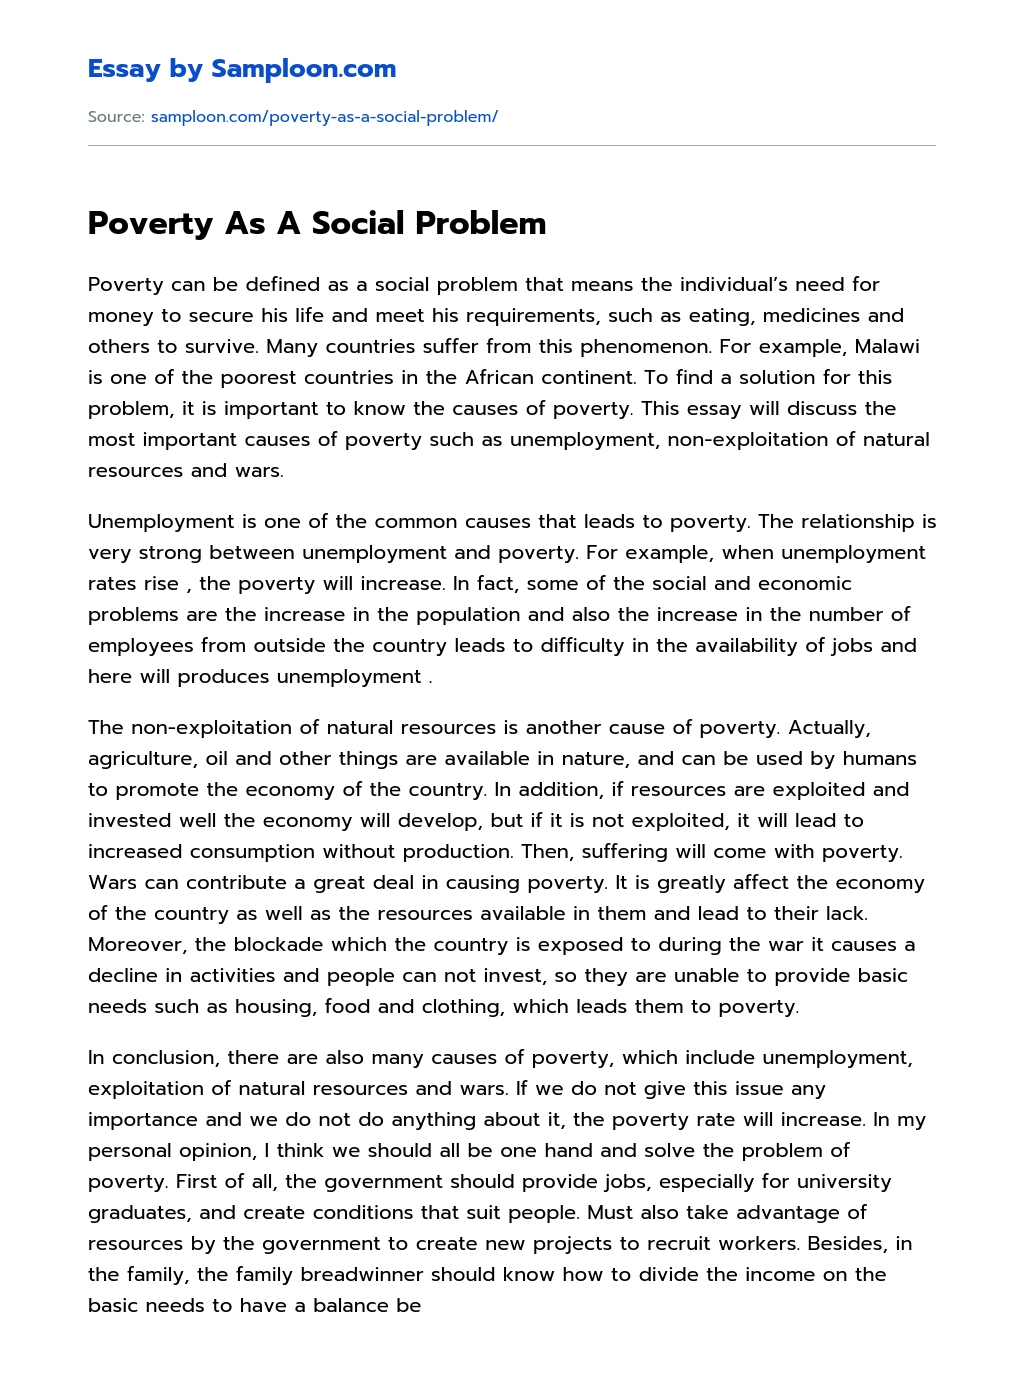 Poverty As A Social Problem essay